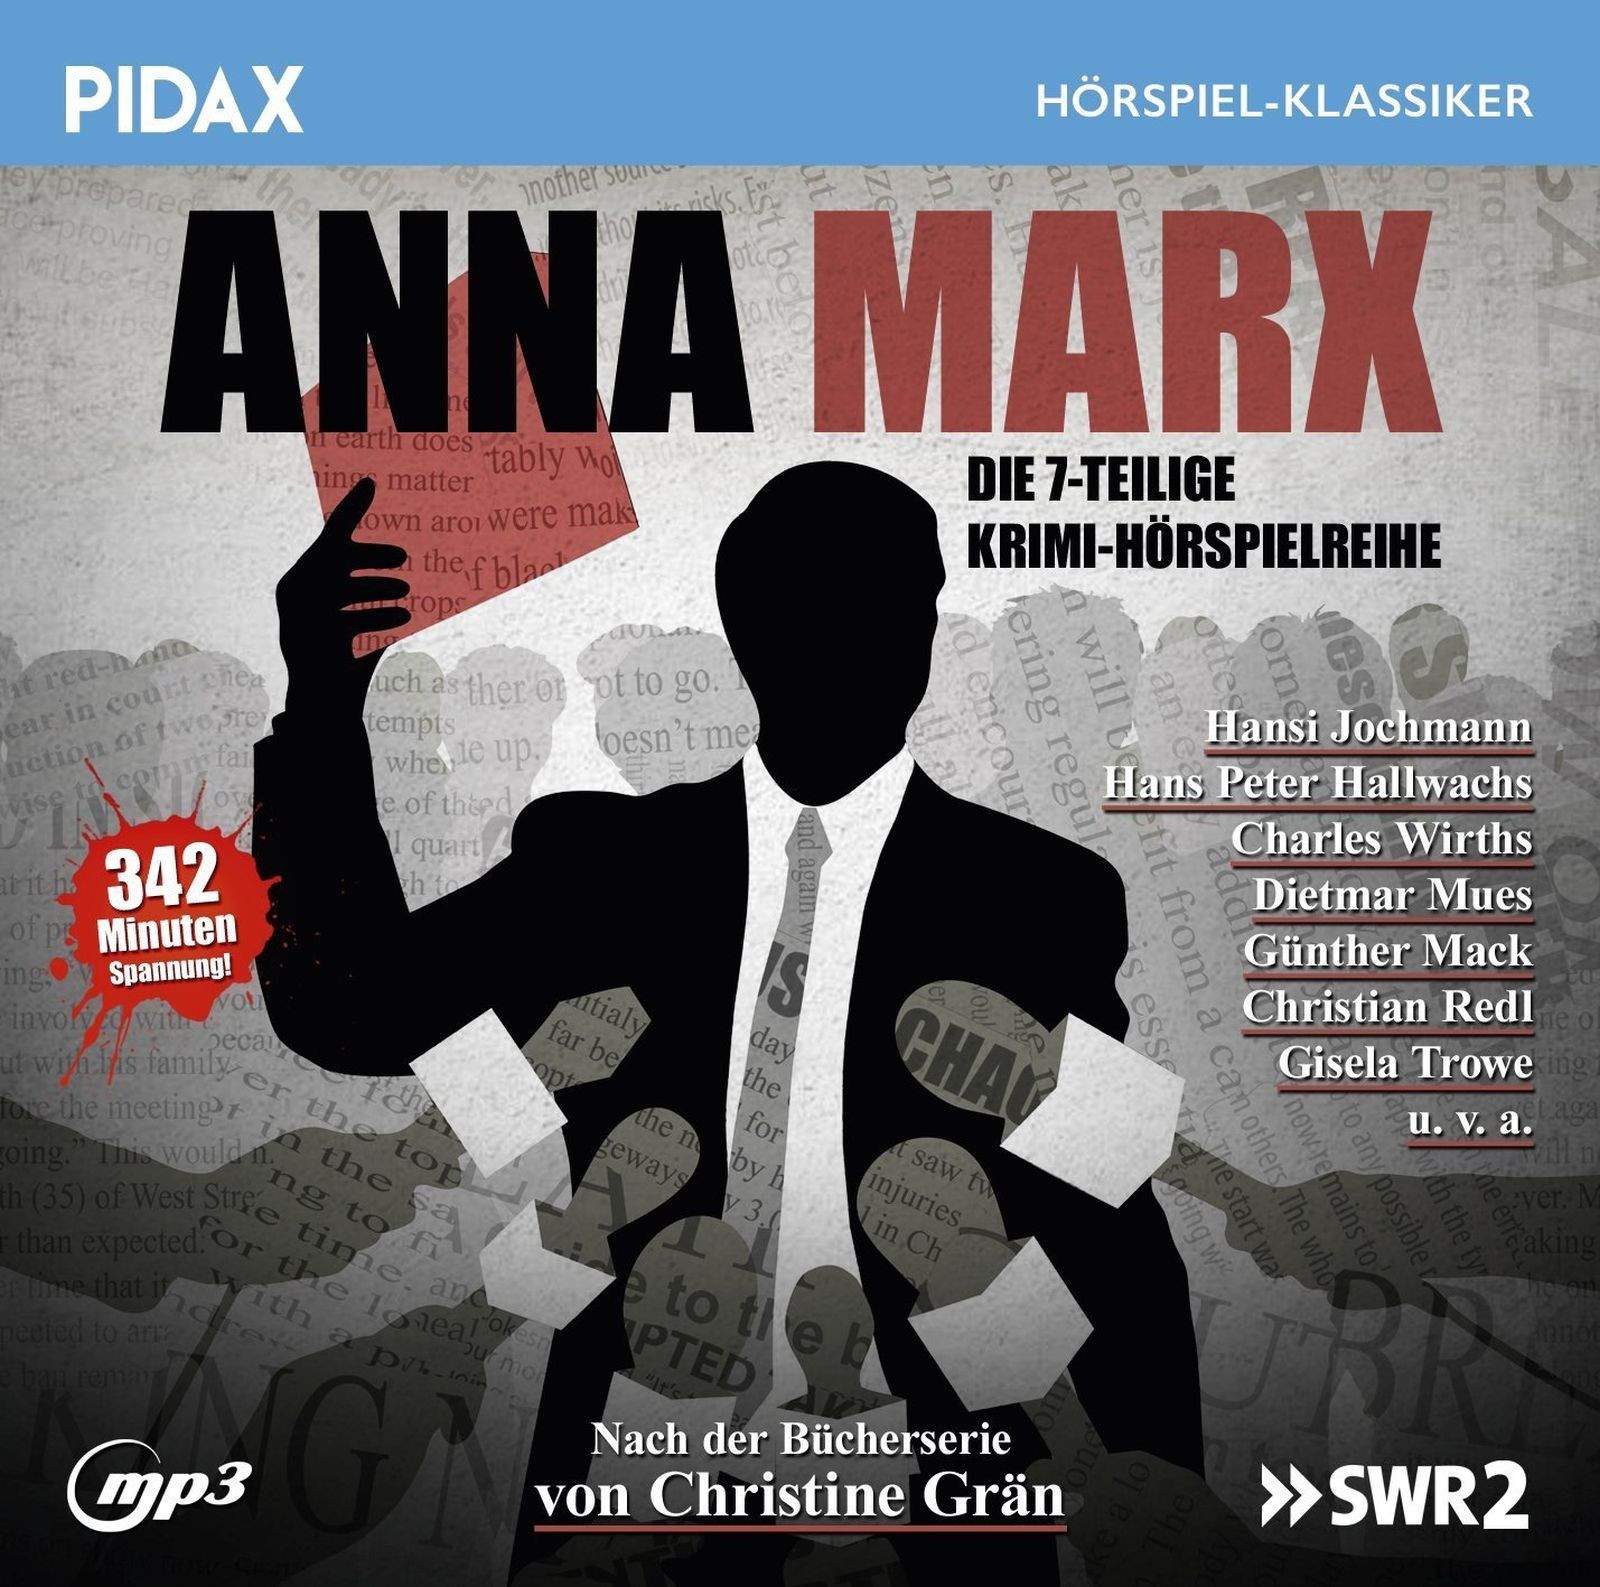 Pidax Hörspiel Klassiker - Anna Marx